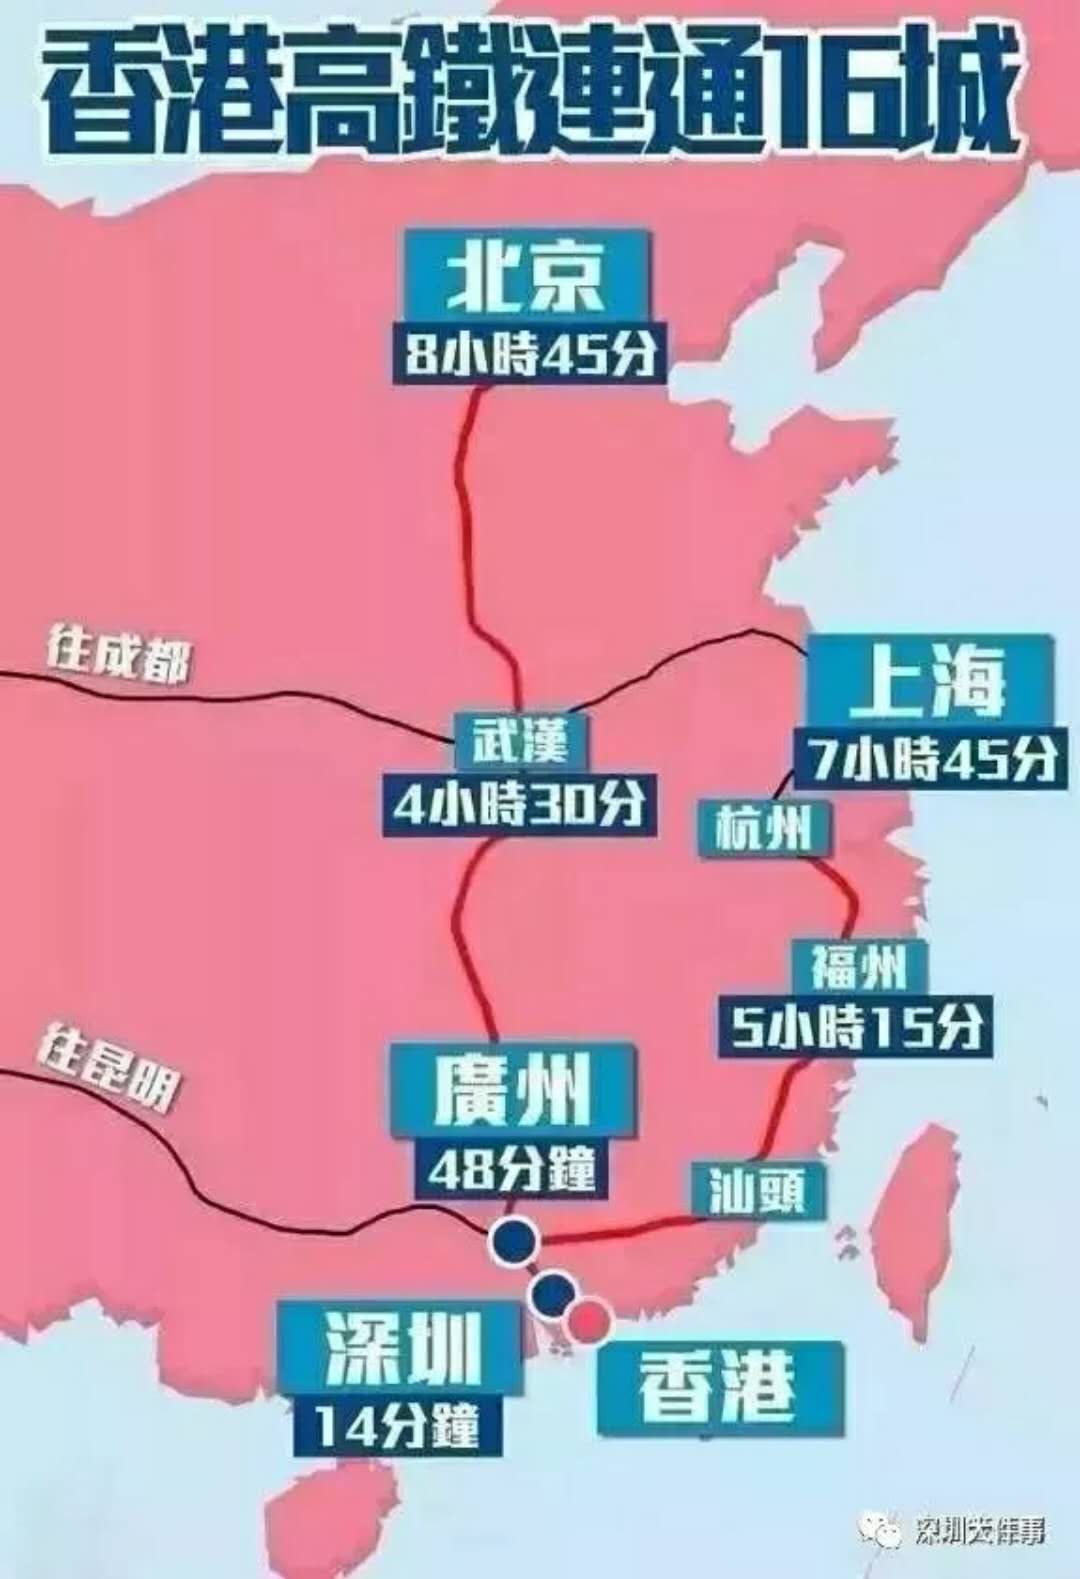 hong-kong-railway-routes.jpg